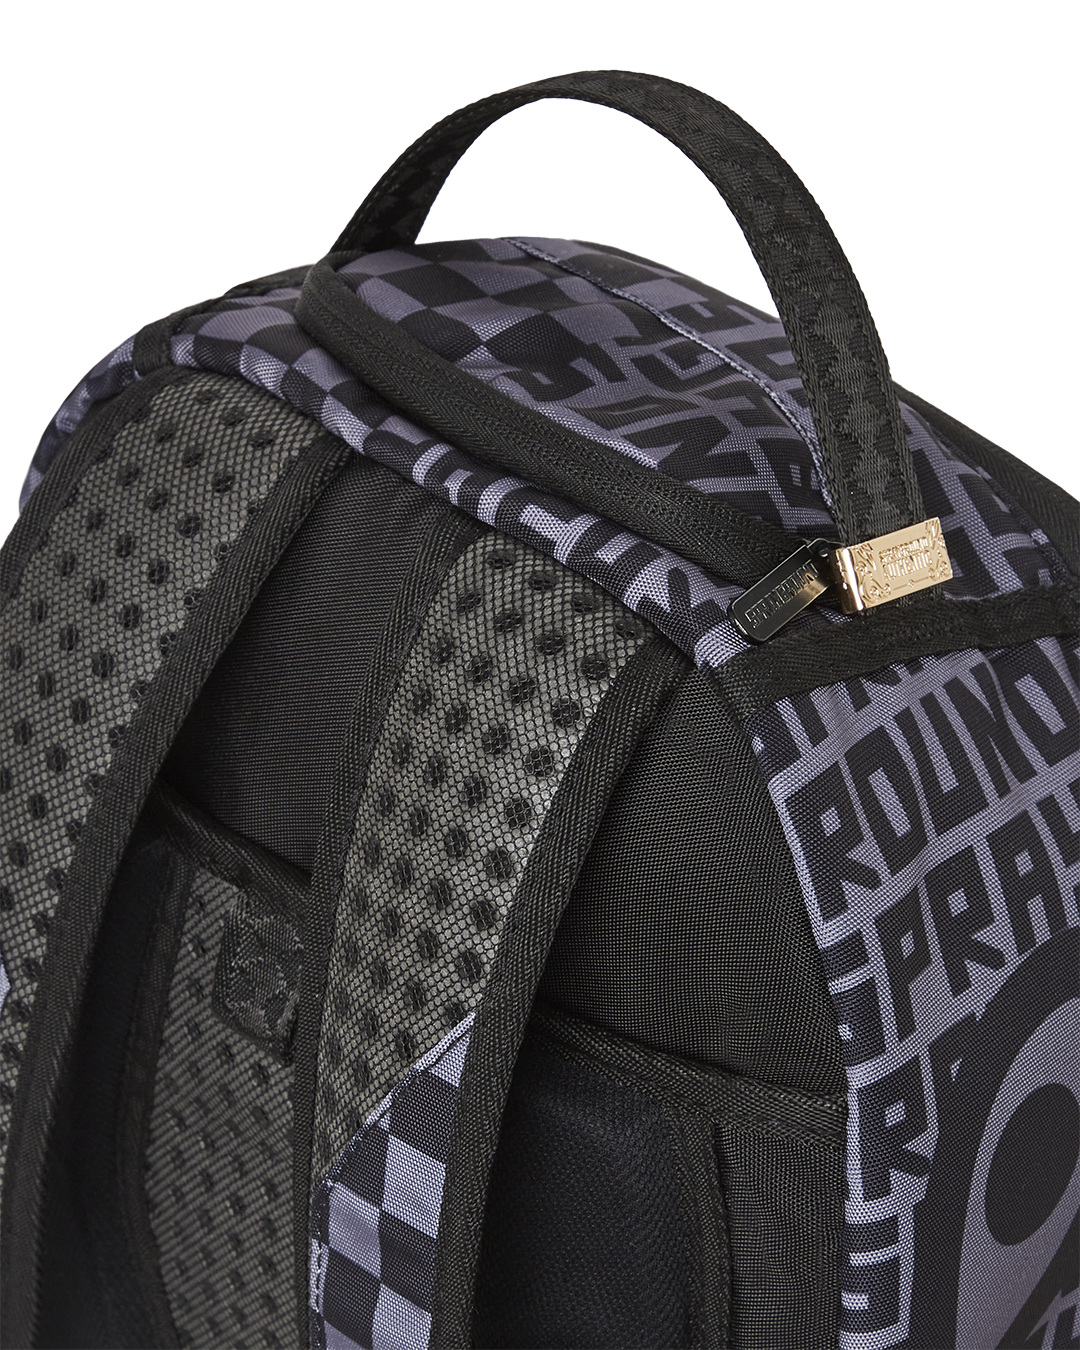 Sprayground fiber optic light show Limited Edition backpack